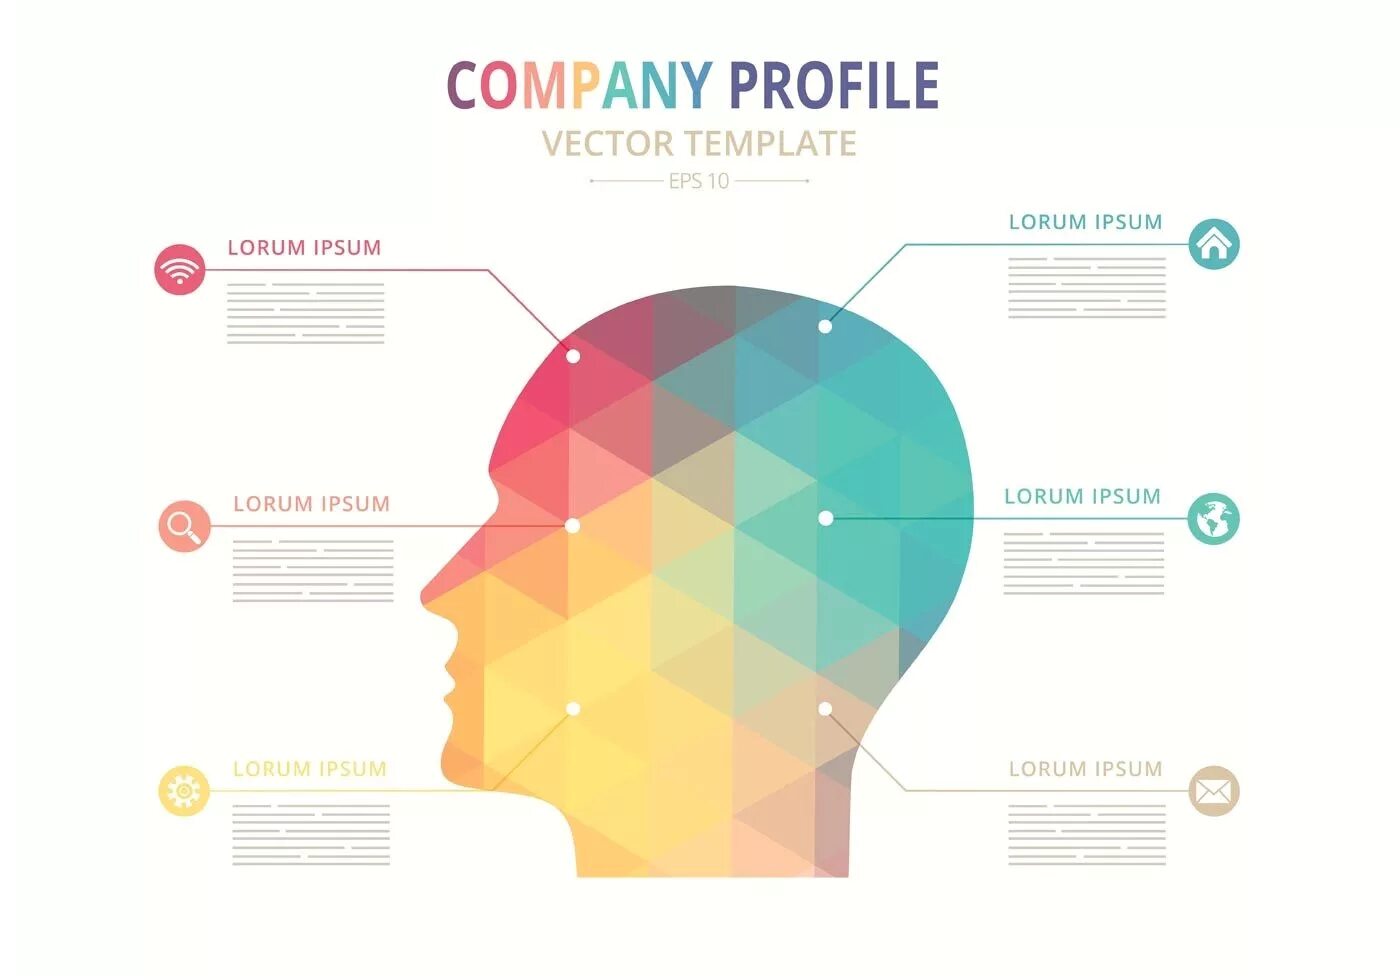 Details profile. Profile компания. Профайл компании пример. Company profile Template. Профиль компании образец.